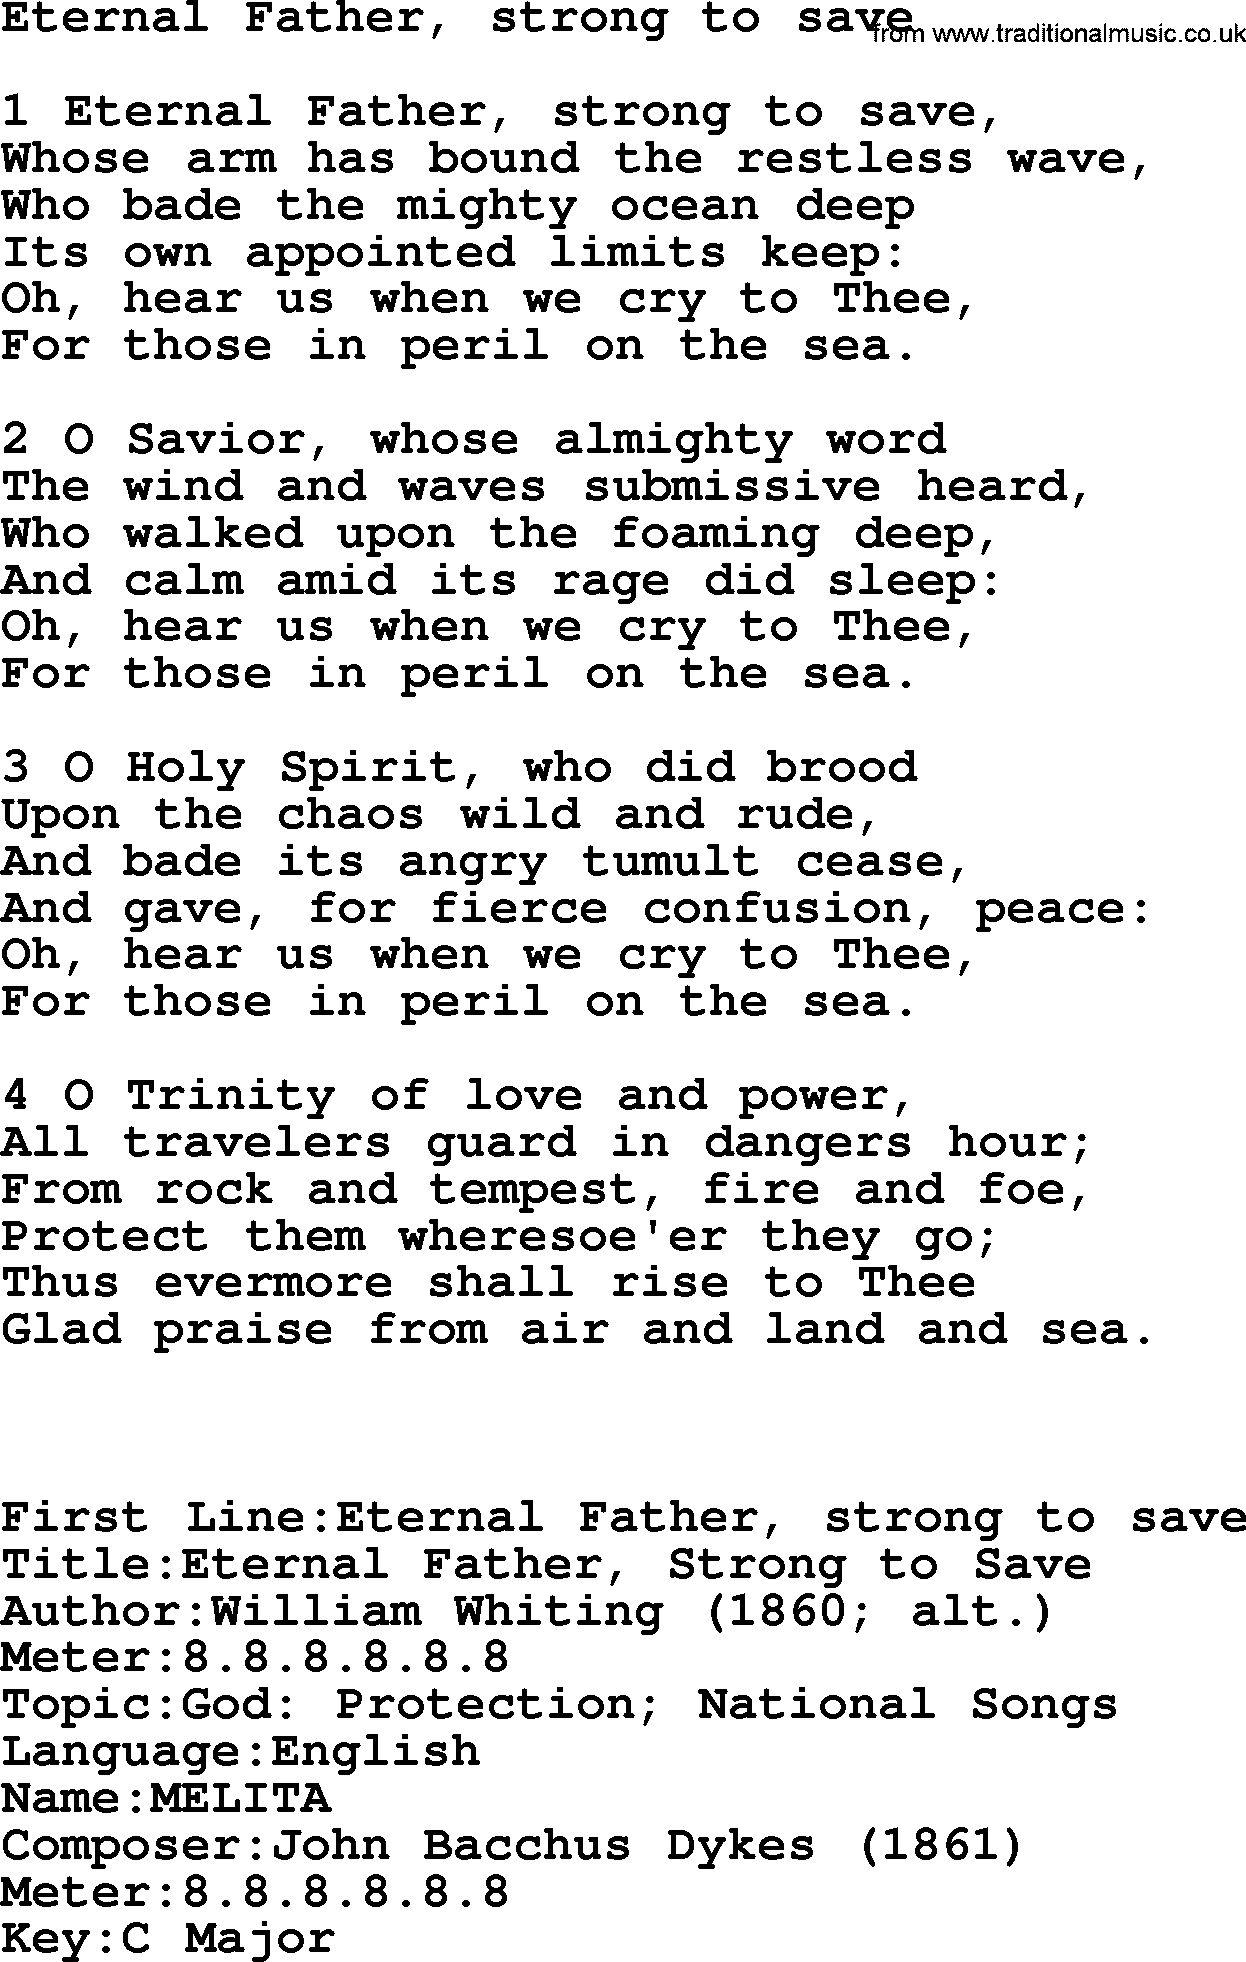 Presbyterian Hymns collection, Hymn: Eternal Father, Strong To Save, lyrics and PDF